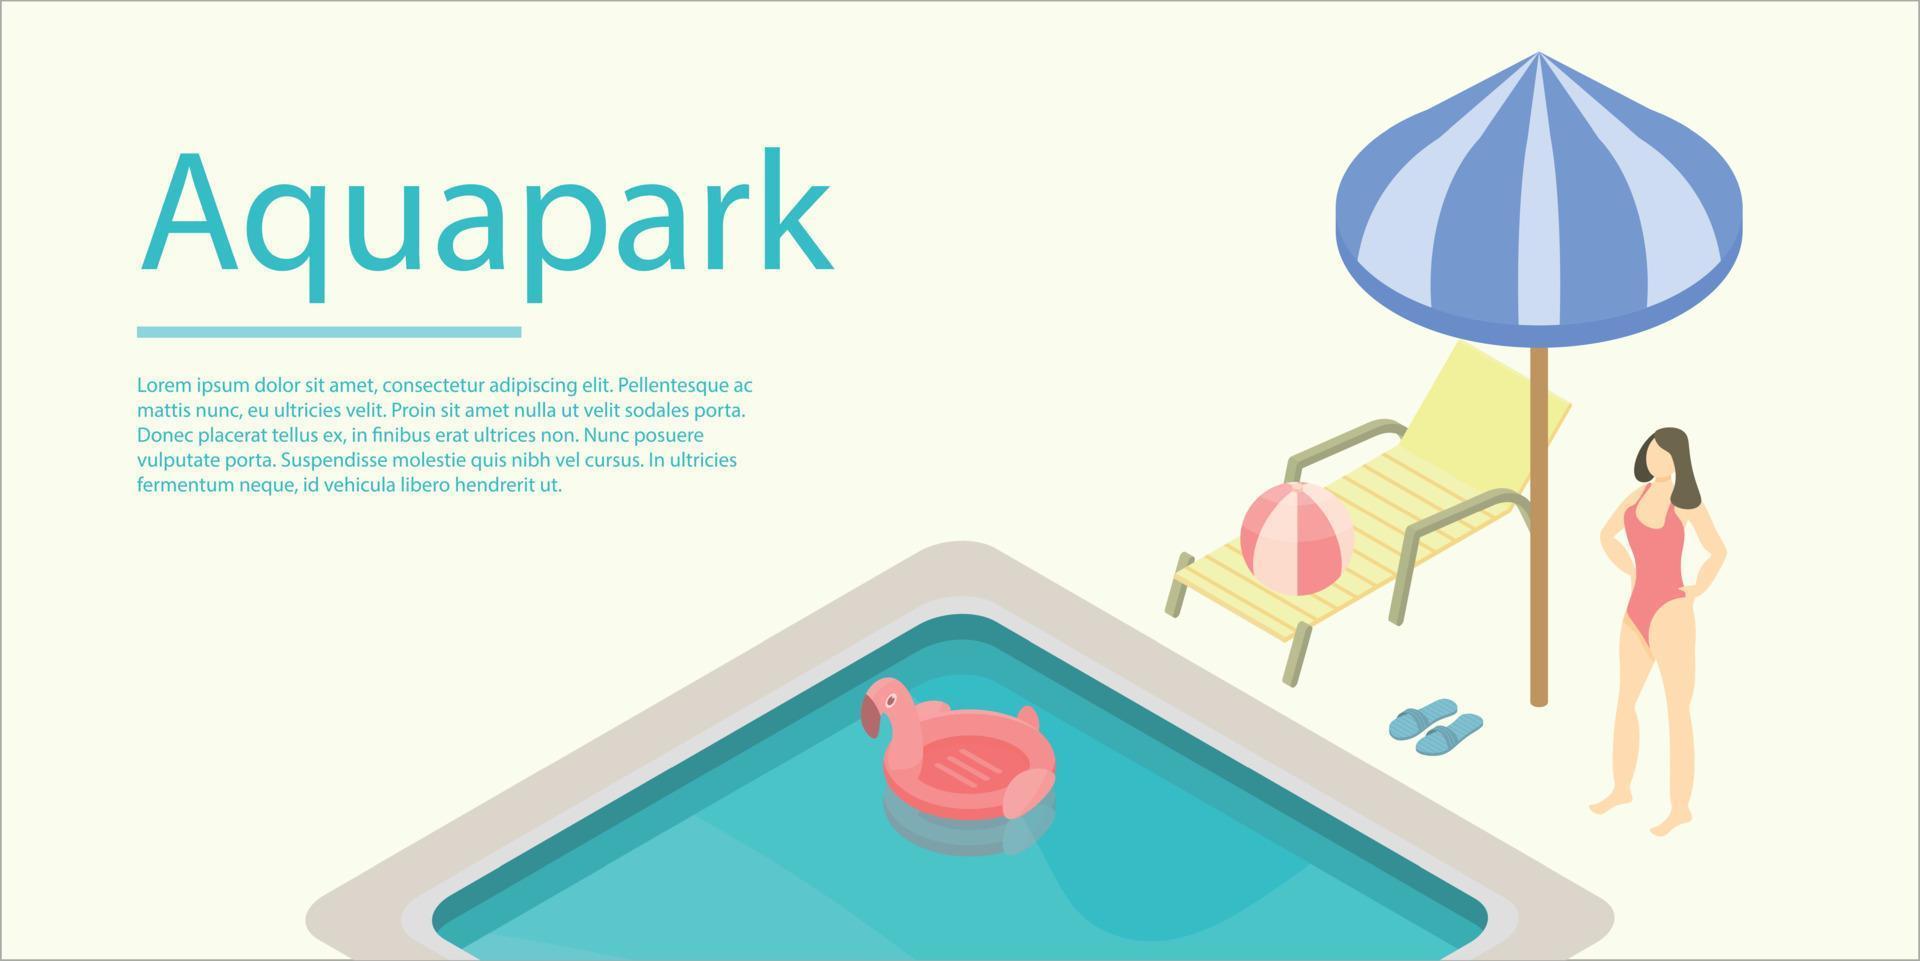 Aquapark concept banner, isometric style vector